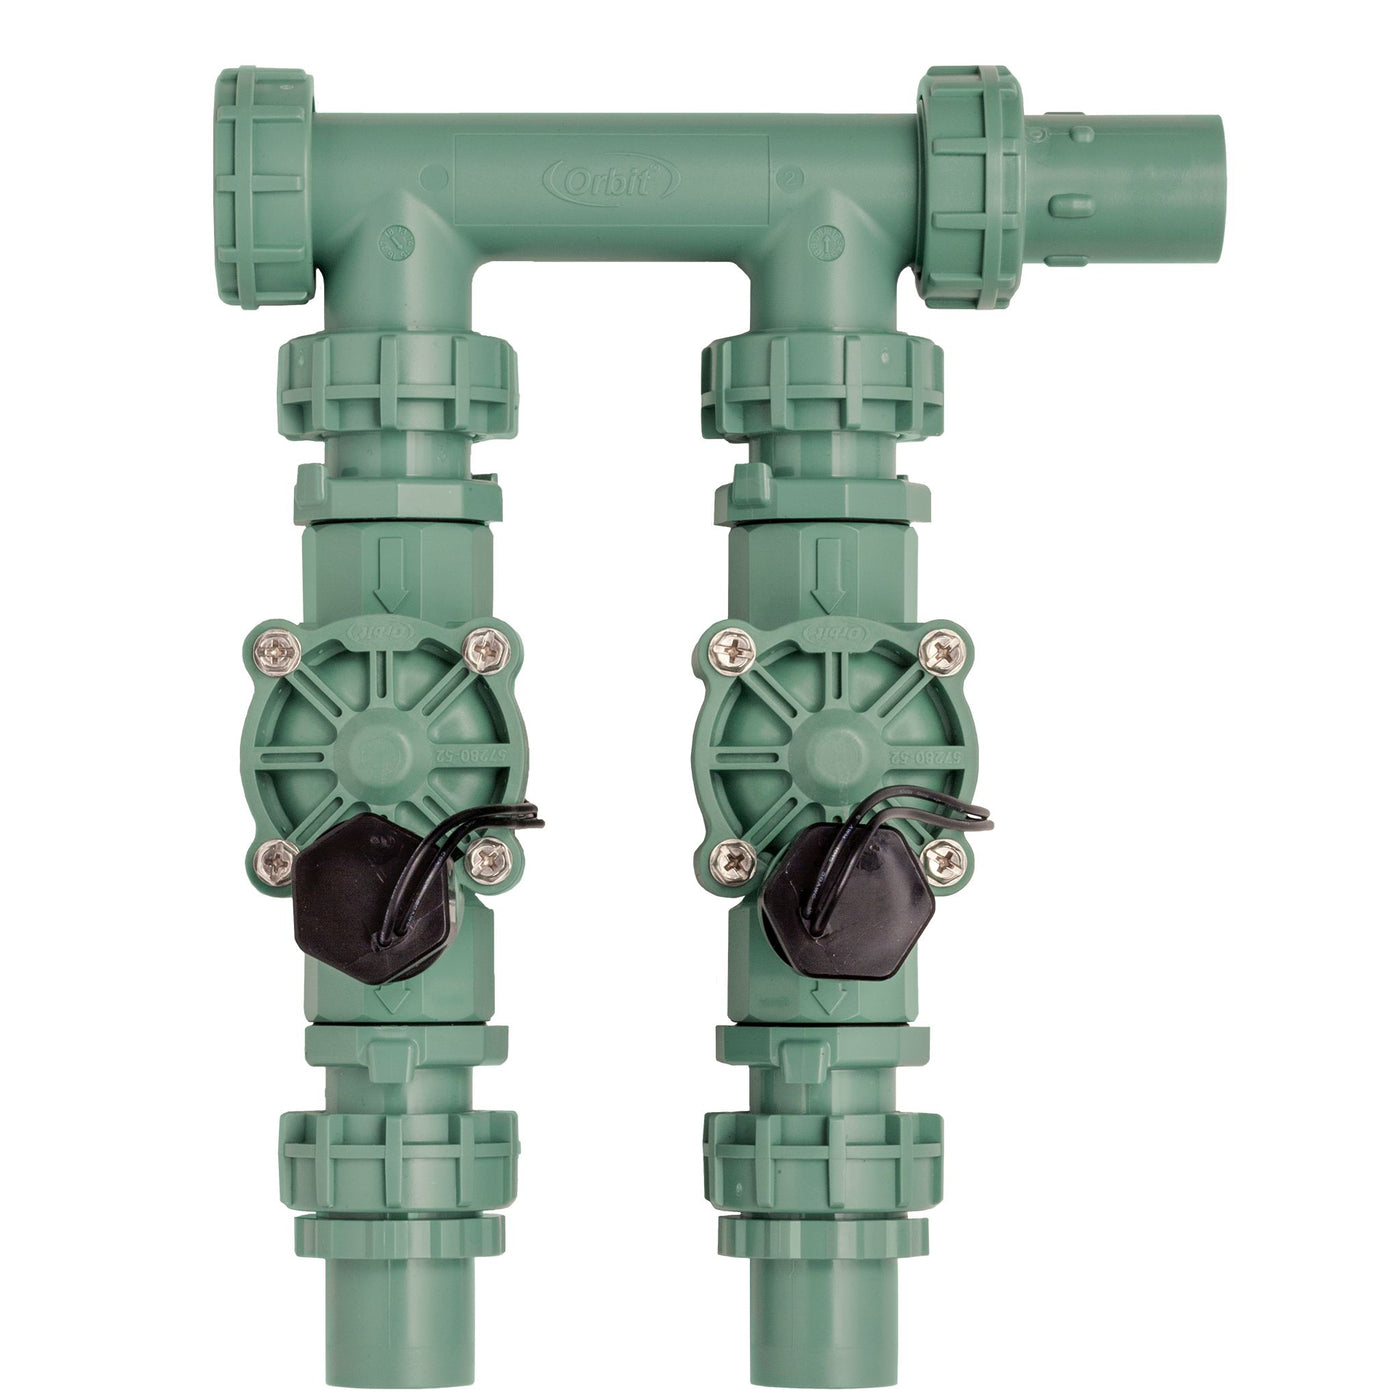 Part# 57250 - Sprinkler valve manifold (2-valve)